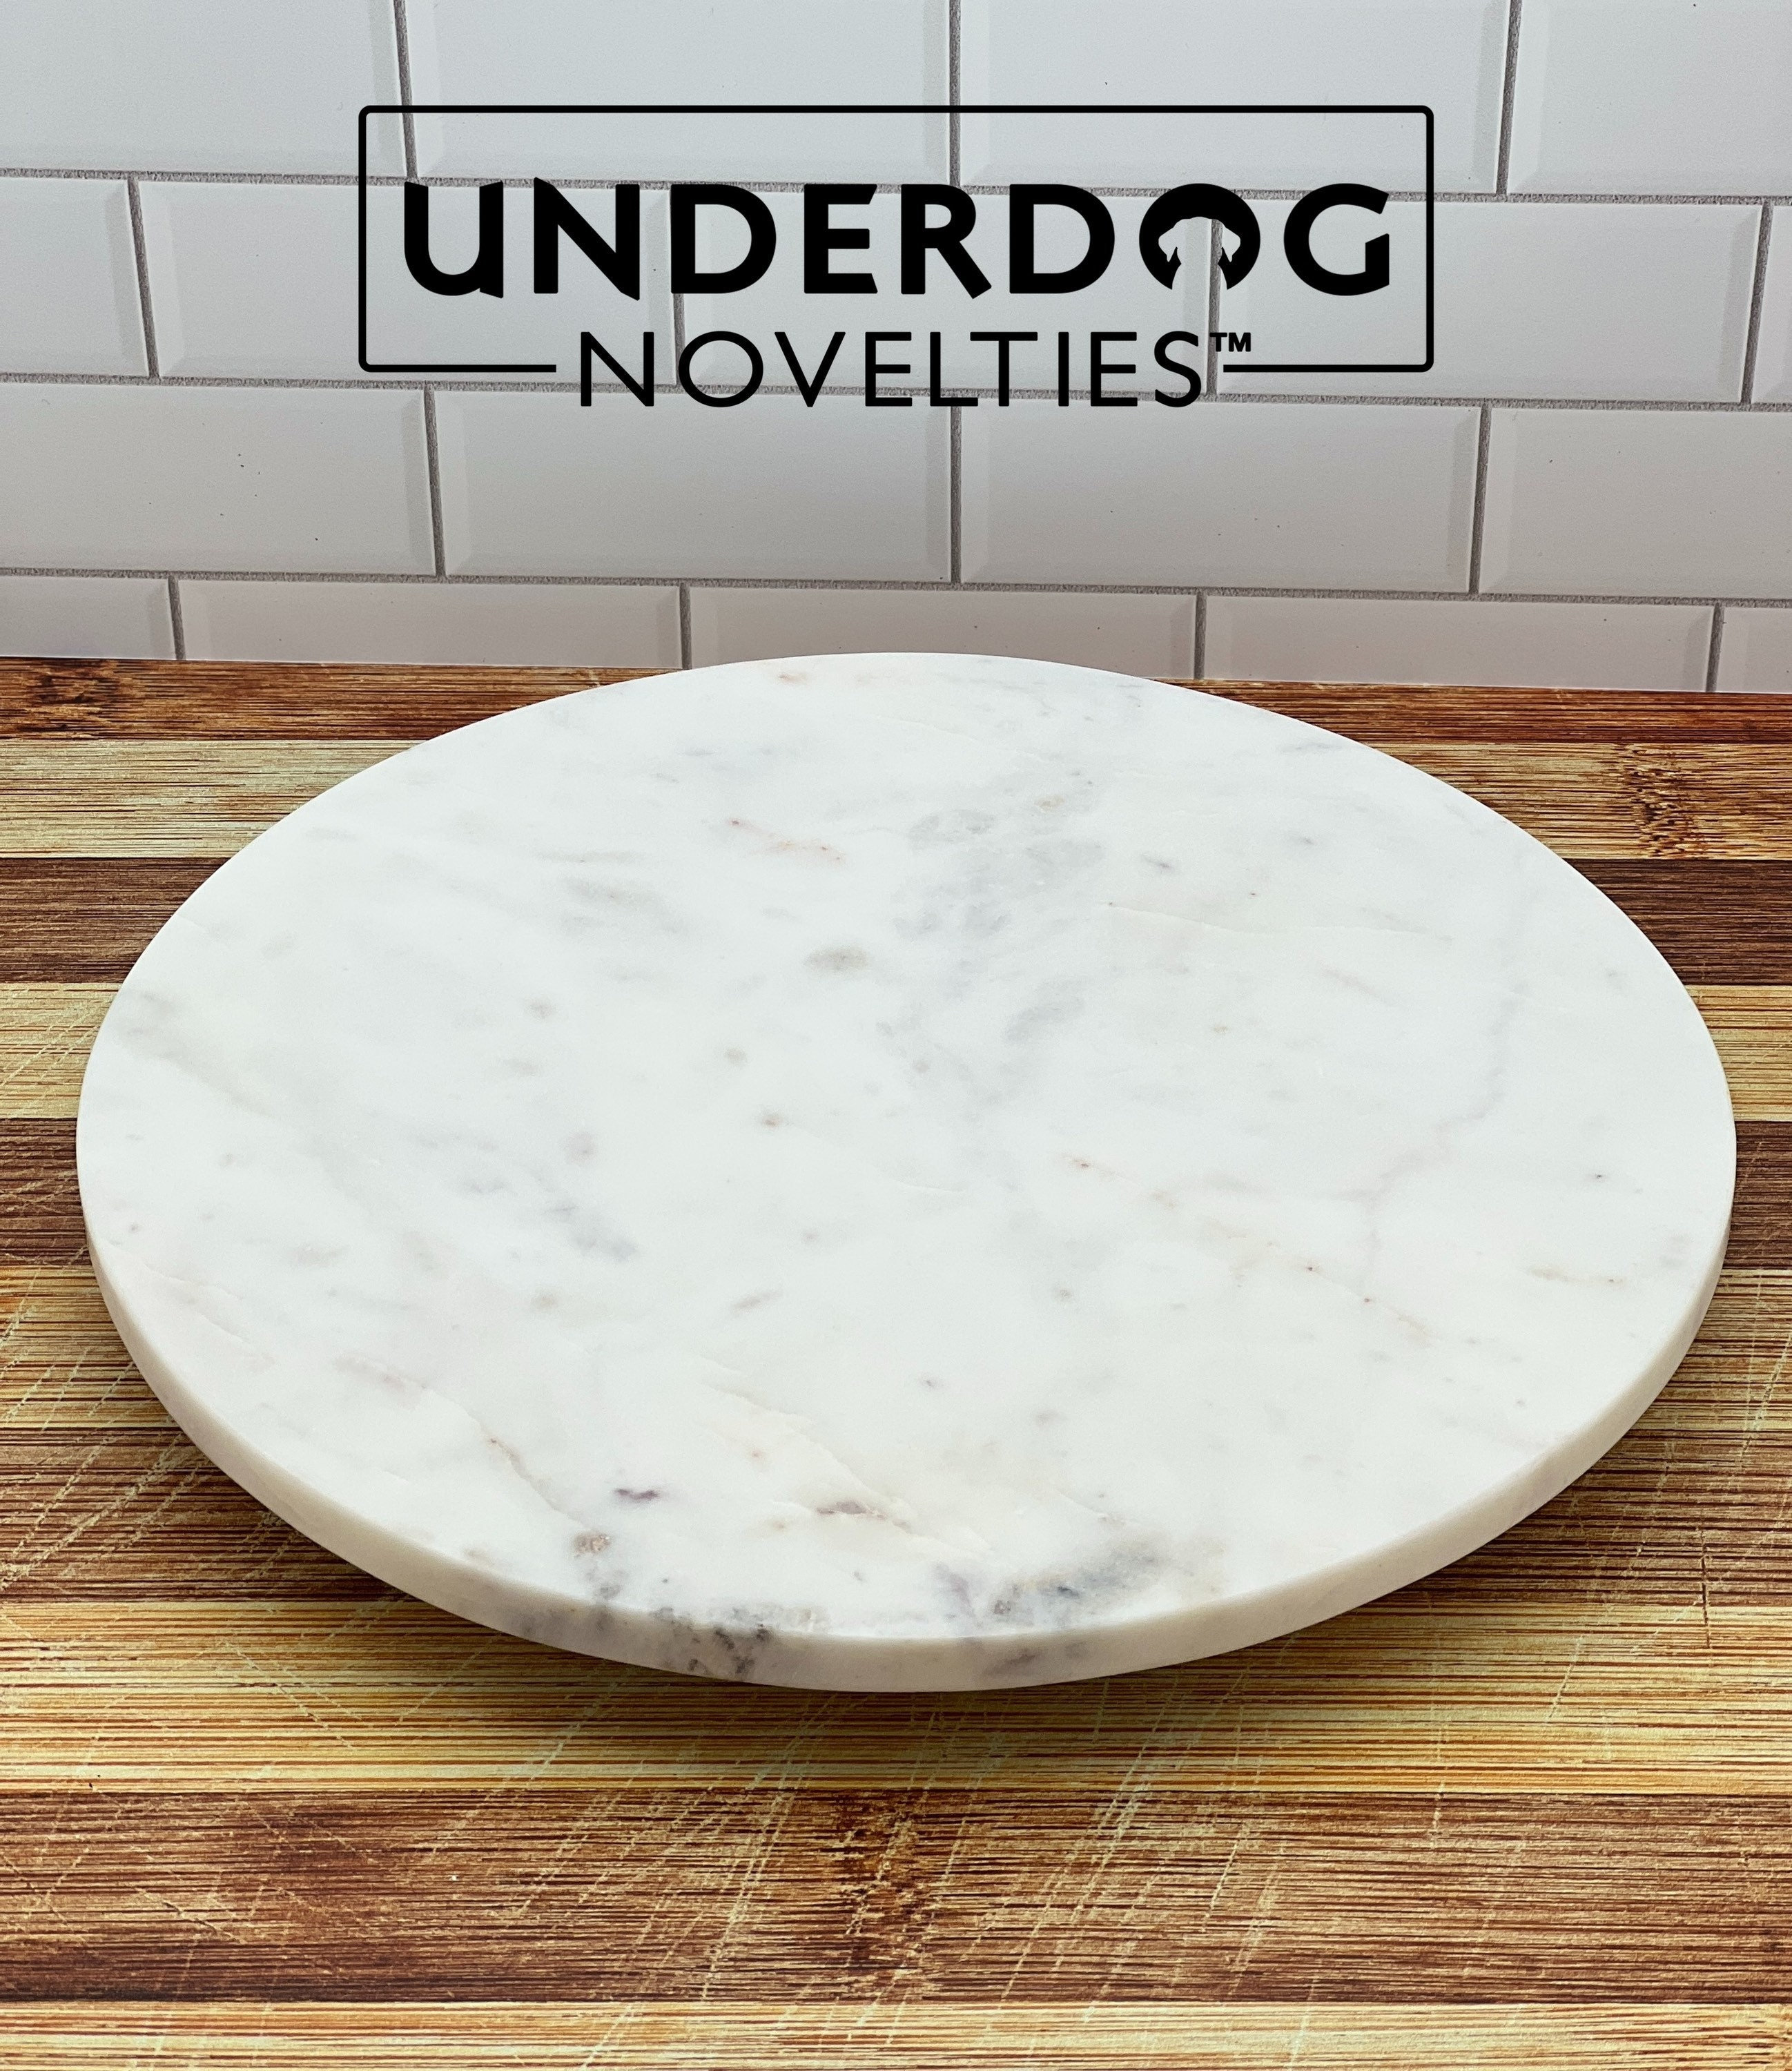 14” Light Solid Wood Round Pizza Cutting Board - Chopping Wood Pad  Beechwood Cutting Board - Round Wooden Board Charcuterie - Mini Small  Breadboard